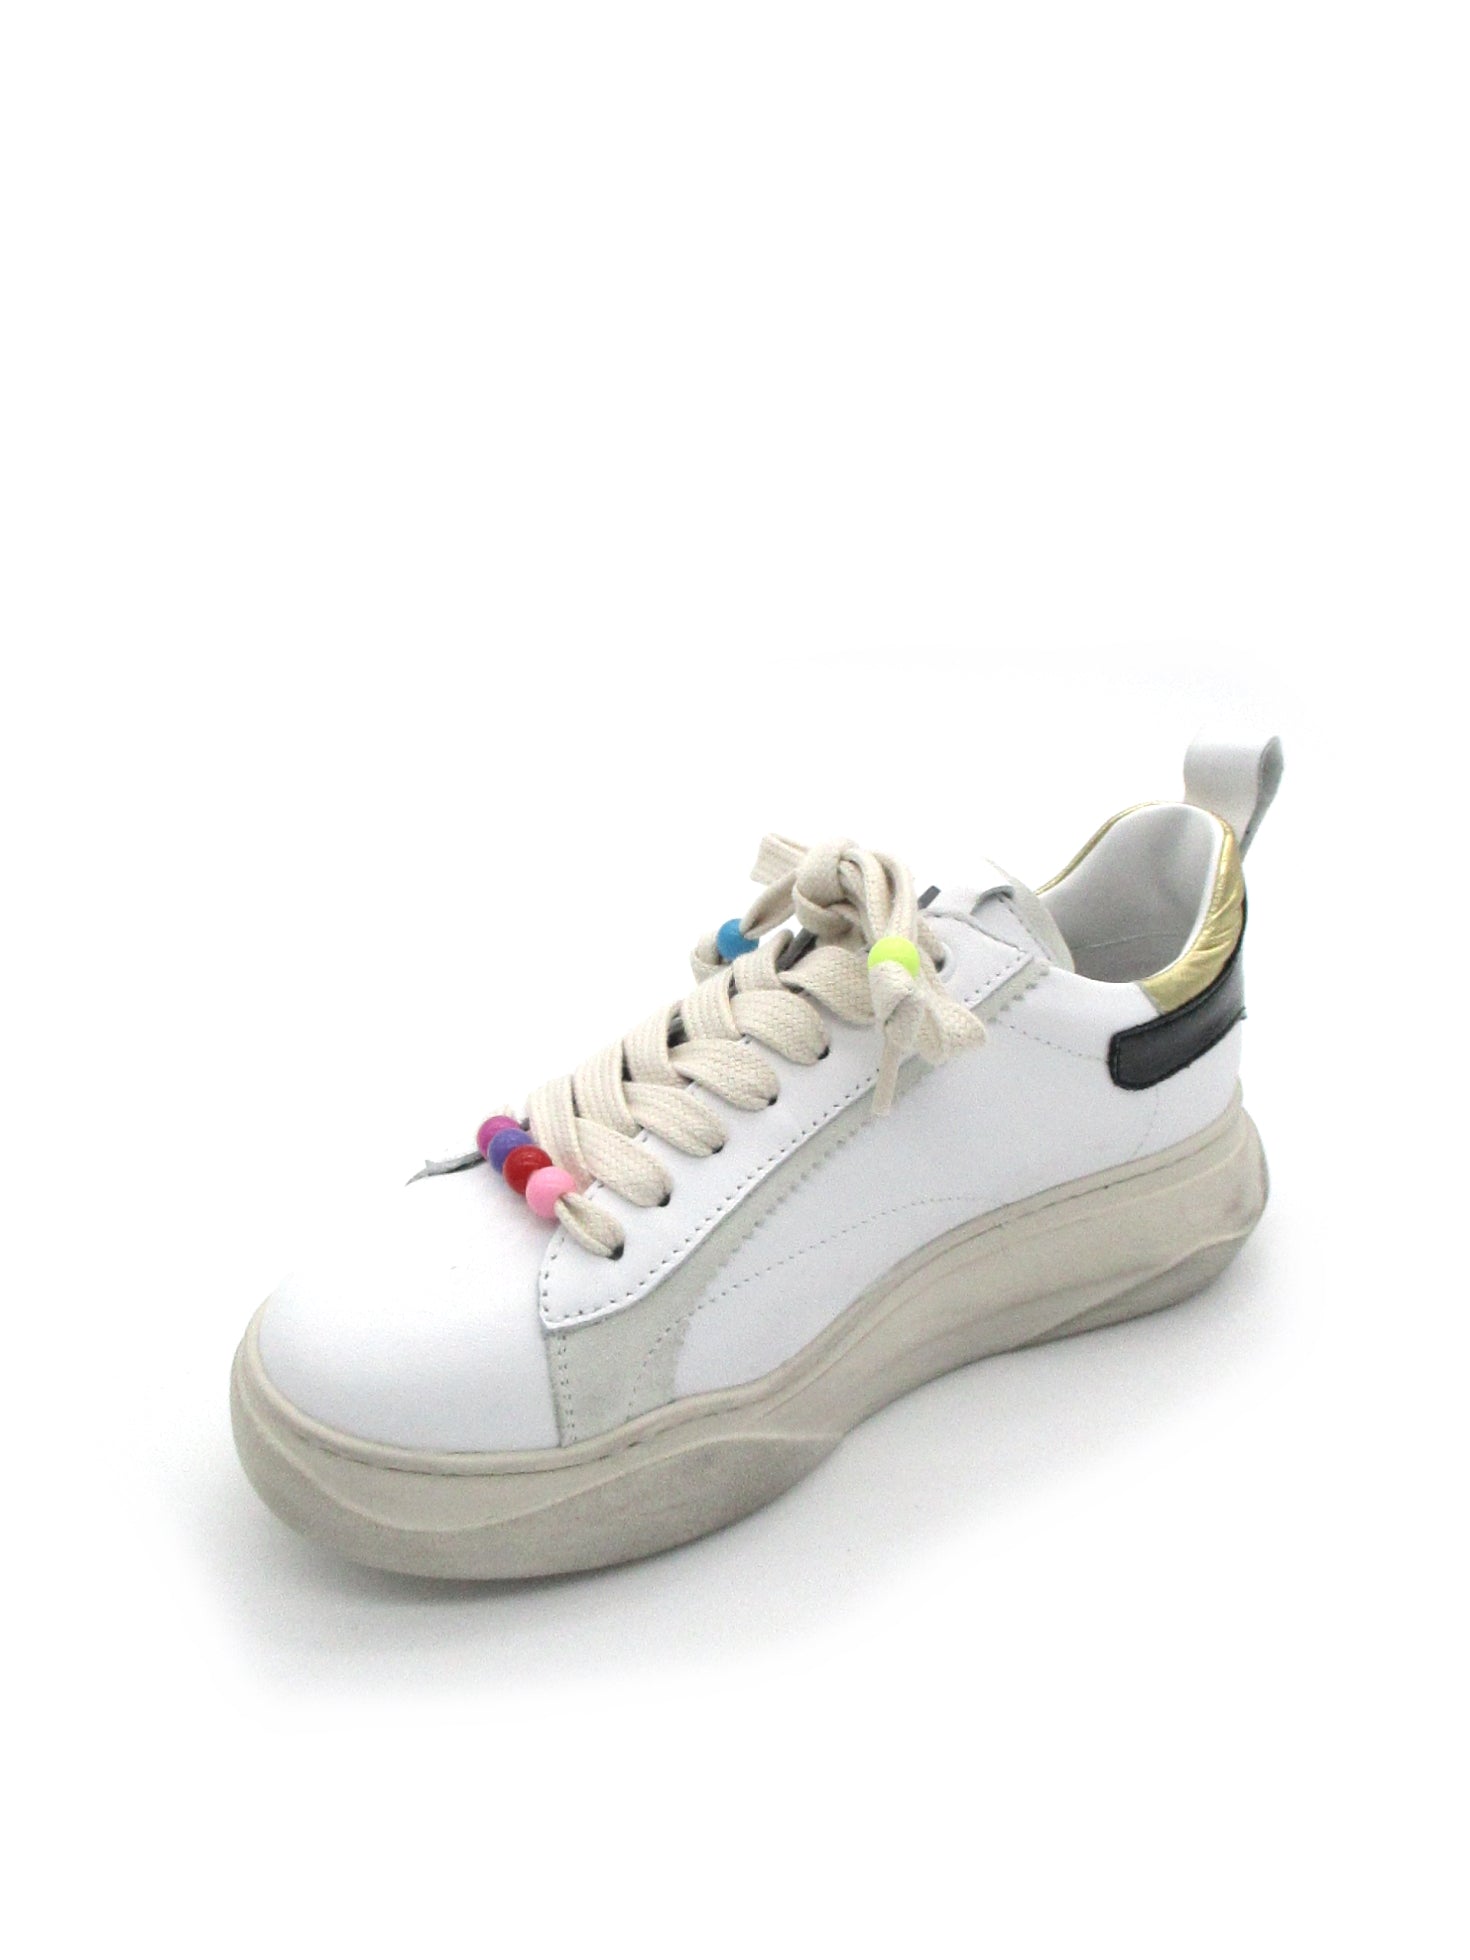 Sneaker pelle donna GIO+ Combi Black White - GIADA 62B -